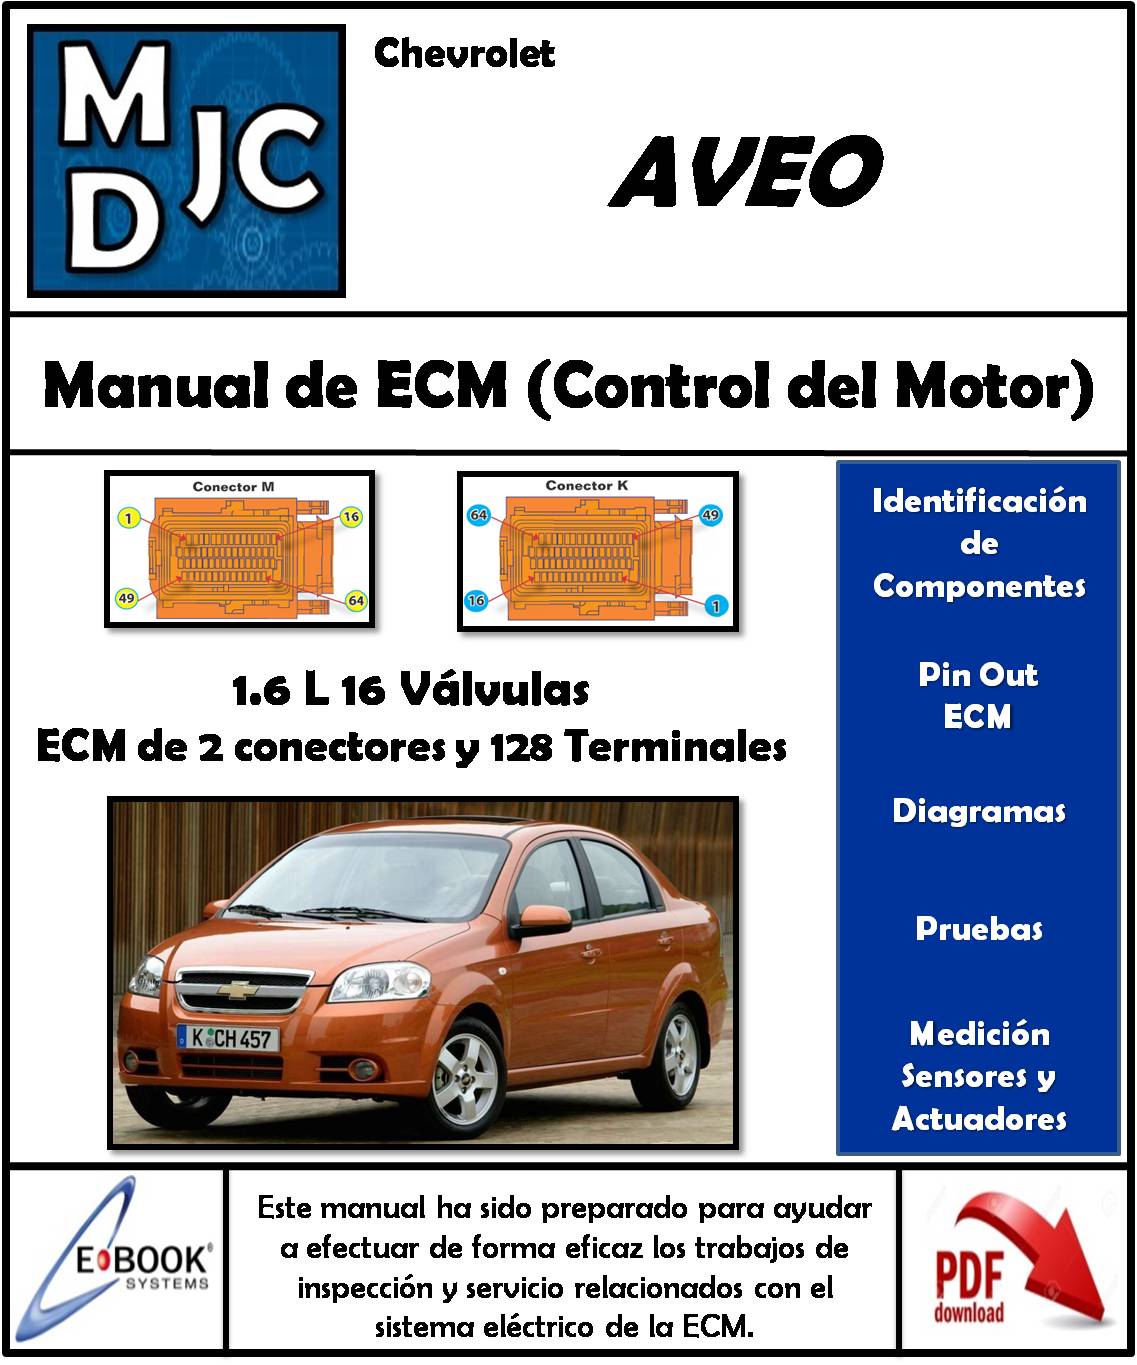 Manual de ECM y Control de Motor Chevrolet Aveo 1.6 L 16 V